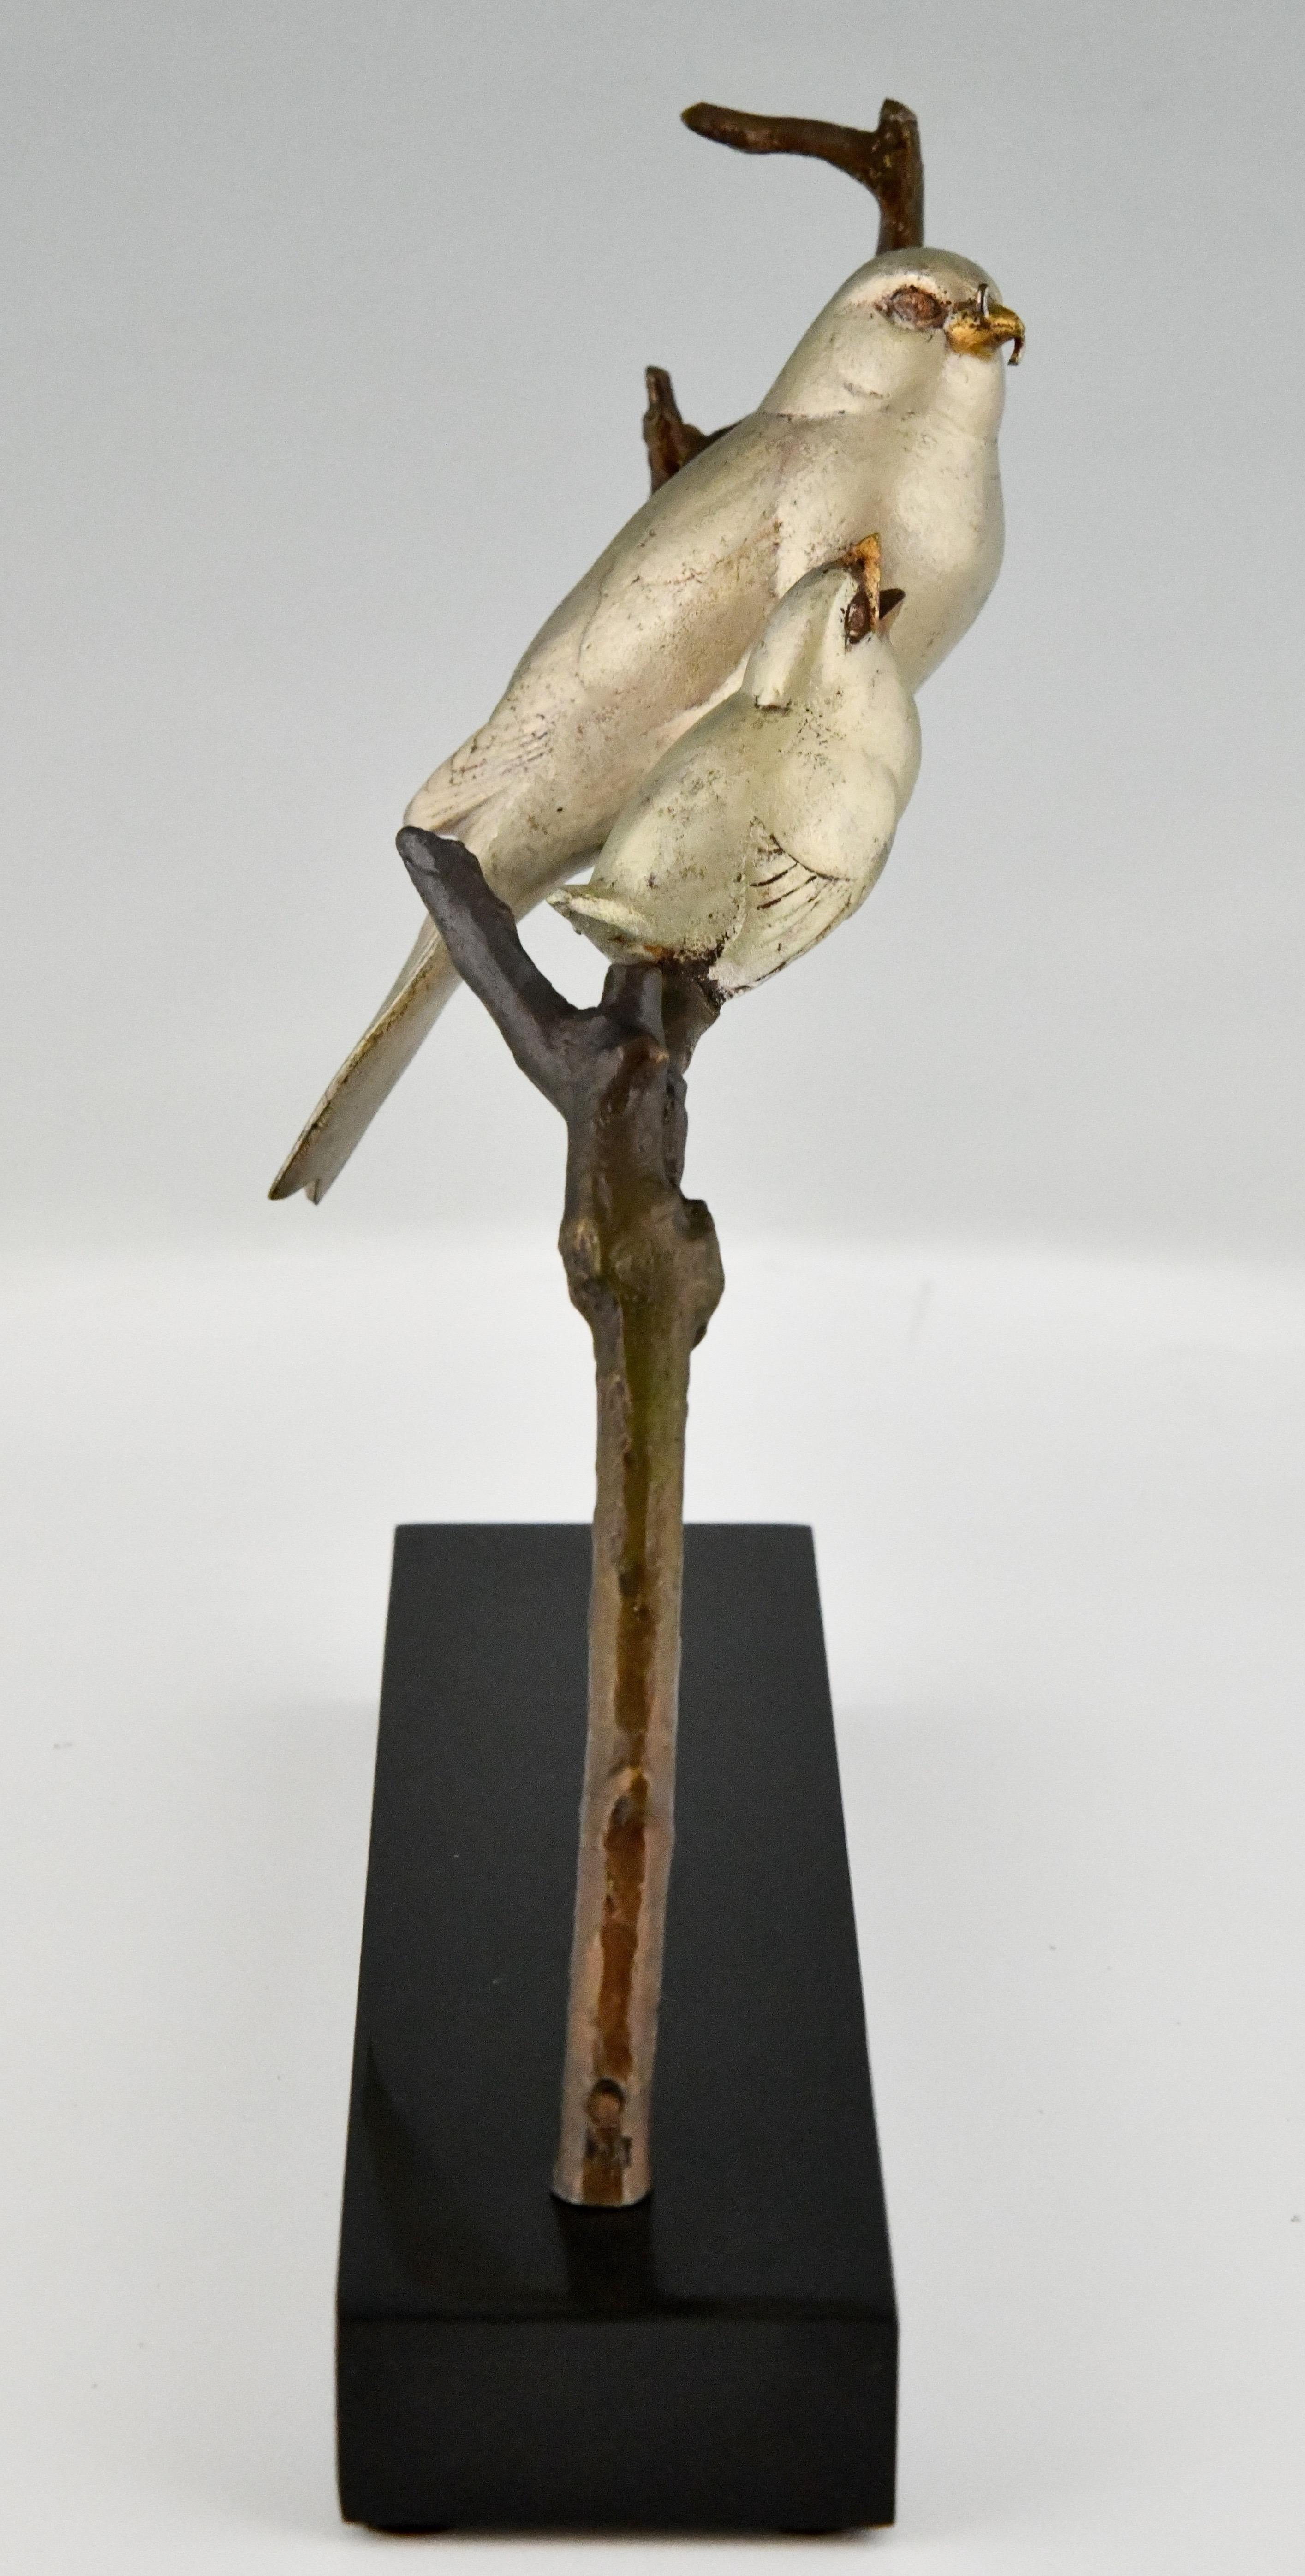 Patinated Art Deco Sculpture Birds on a Branch Signed by André Vincent Becquerel 1930 For Sale